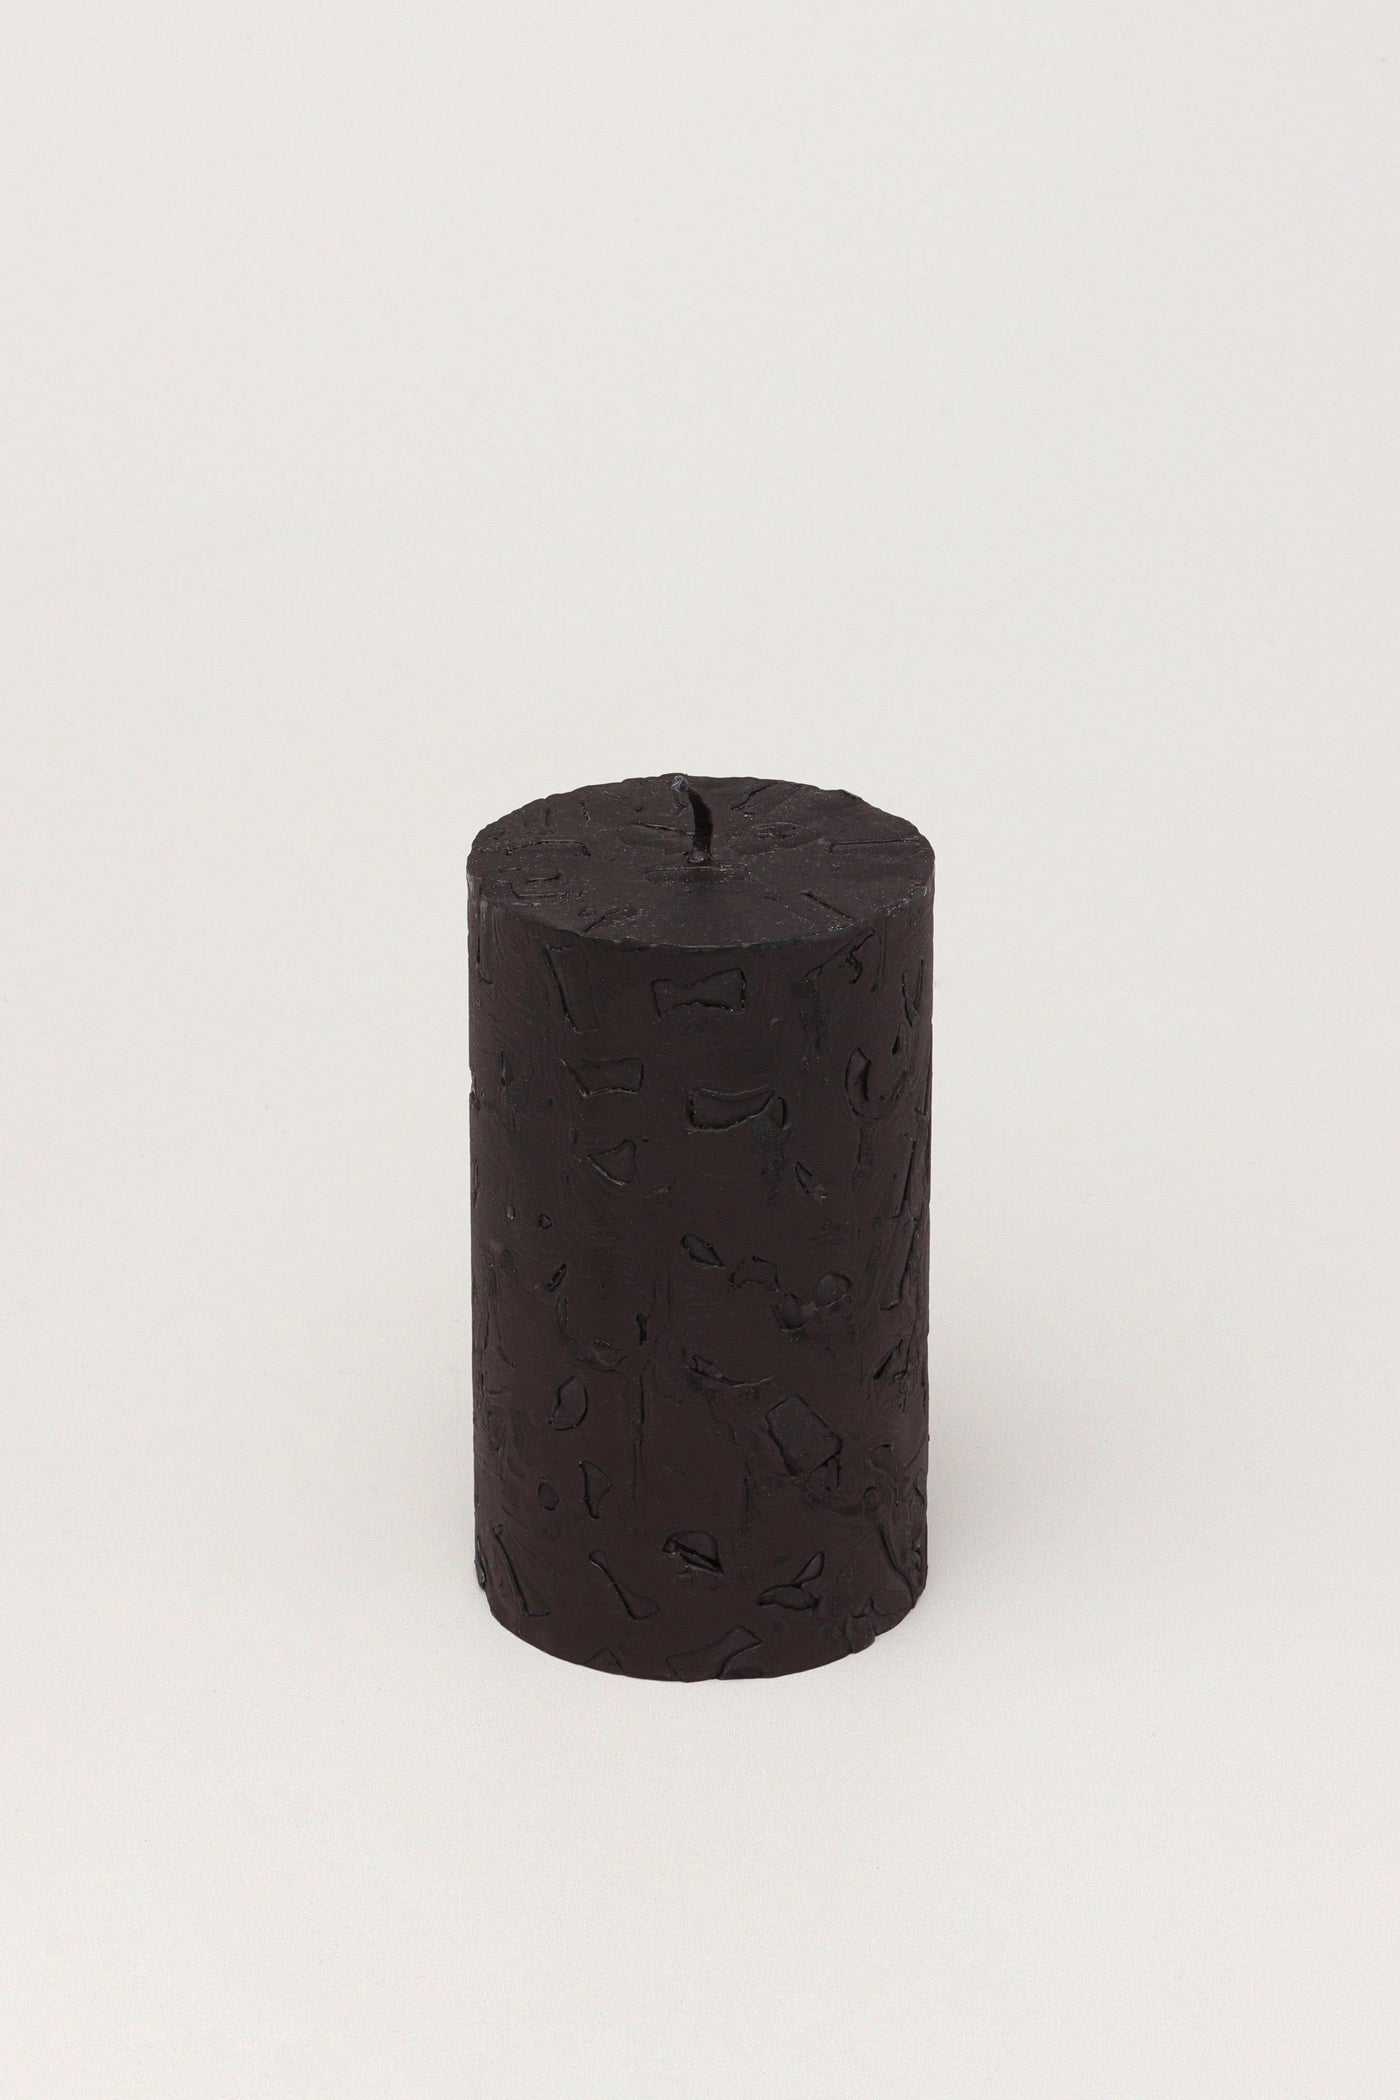 G Decor Candles Black / Medium Adeline Onyx Black Textured Retro Pillar Candle